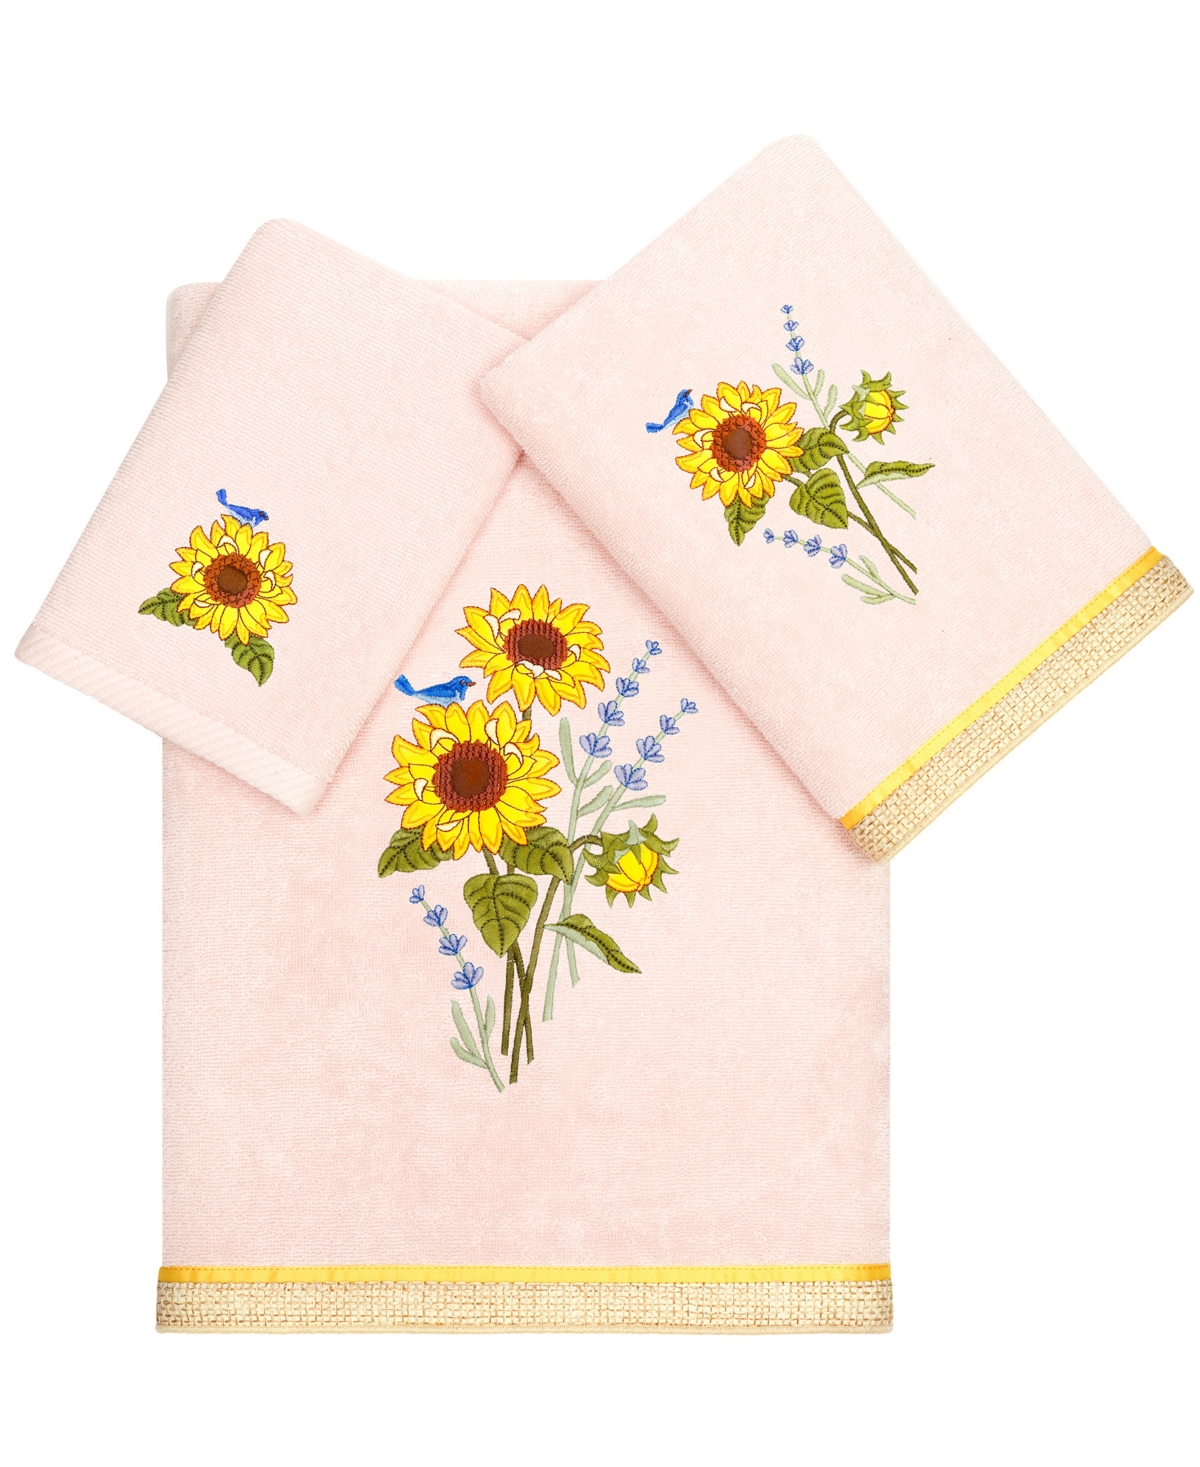 Linum Home Textiles Turkish Cotton Girasol Embellished Towel Set, 3 Piece In Blush